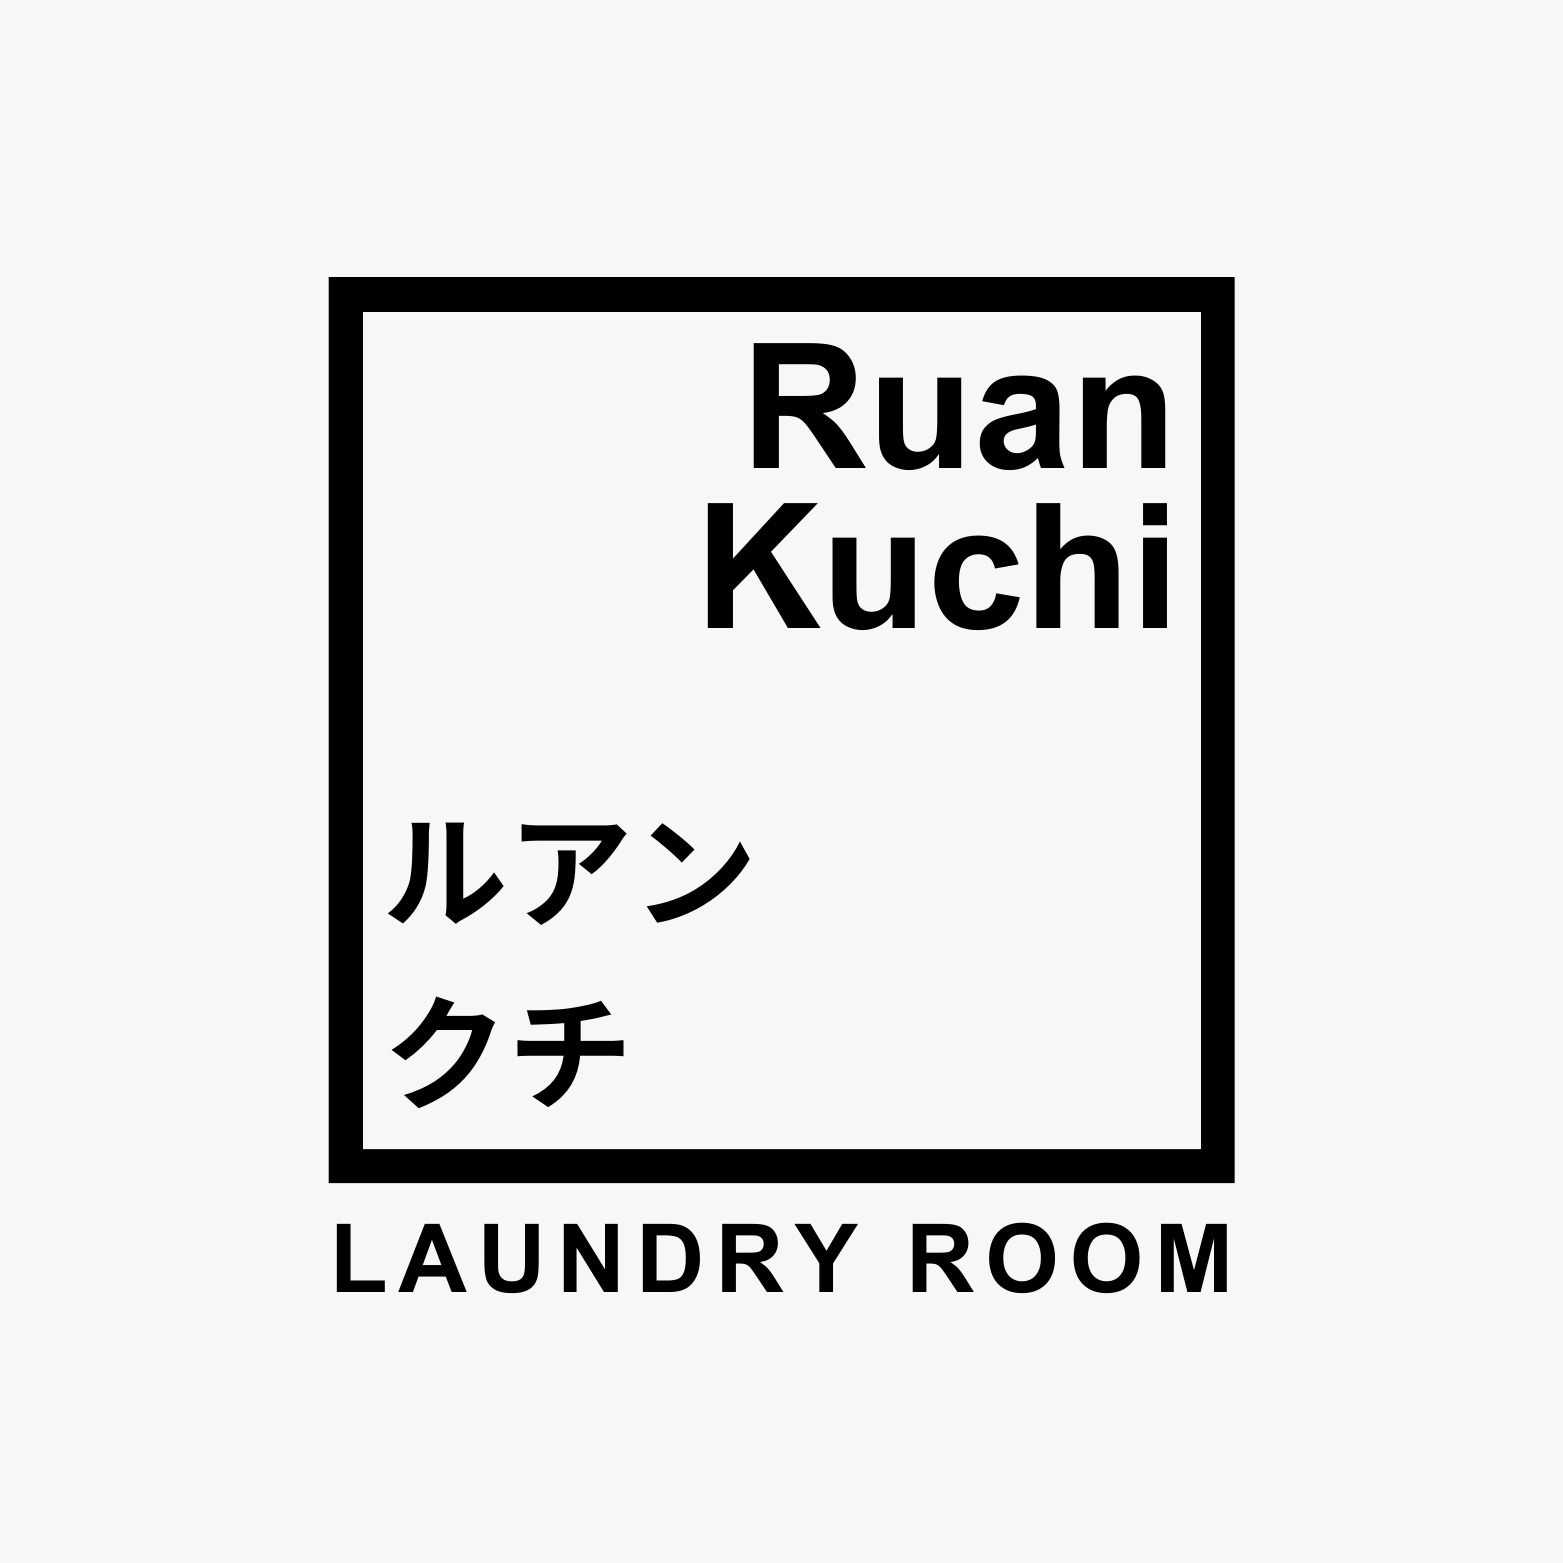 Ruan Kuchi Laundry